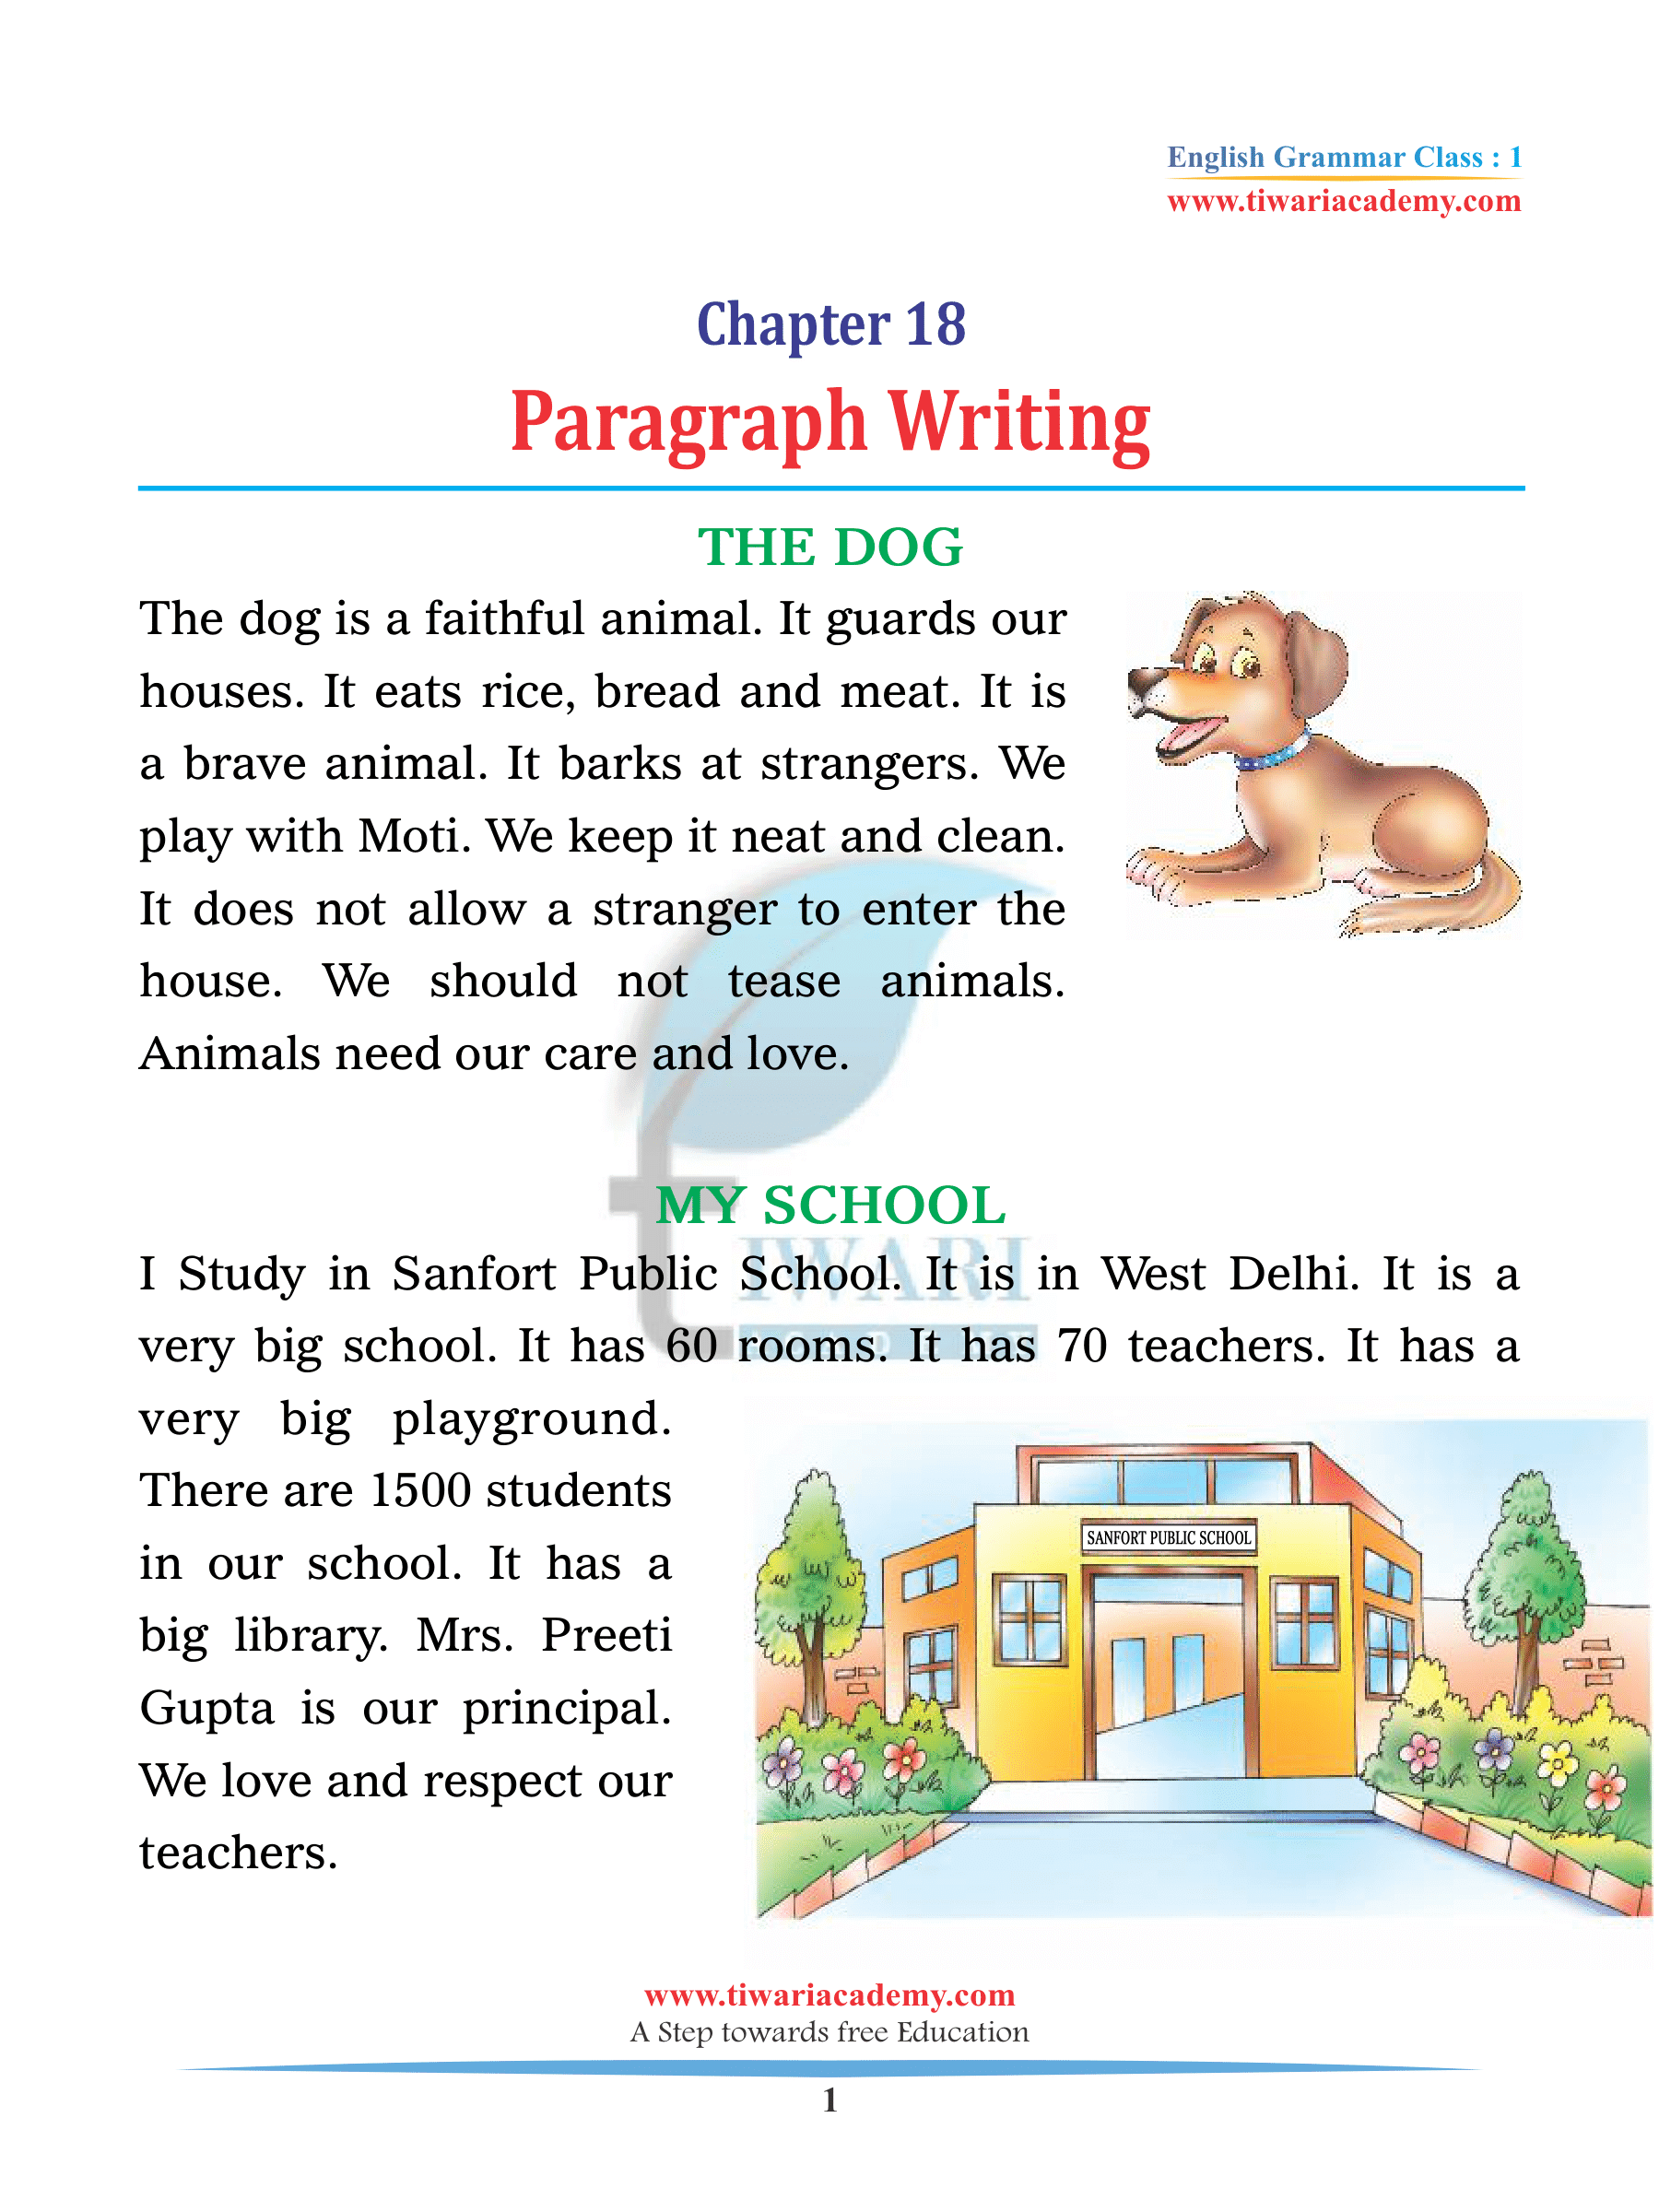 English Grammar for Class 1 Paragraph Writing